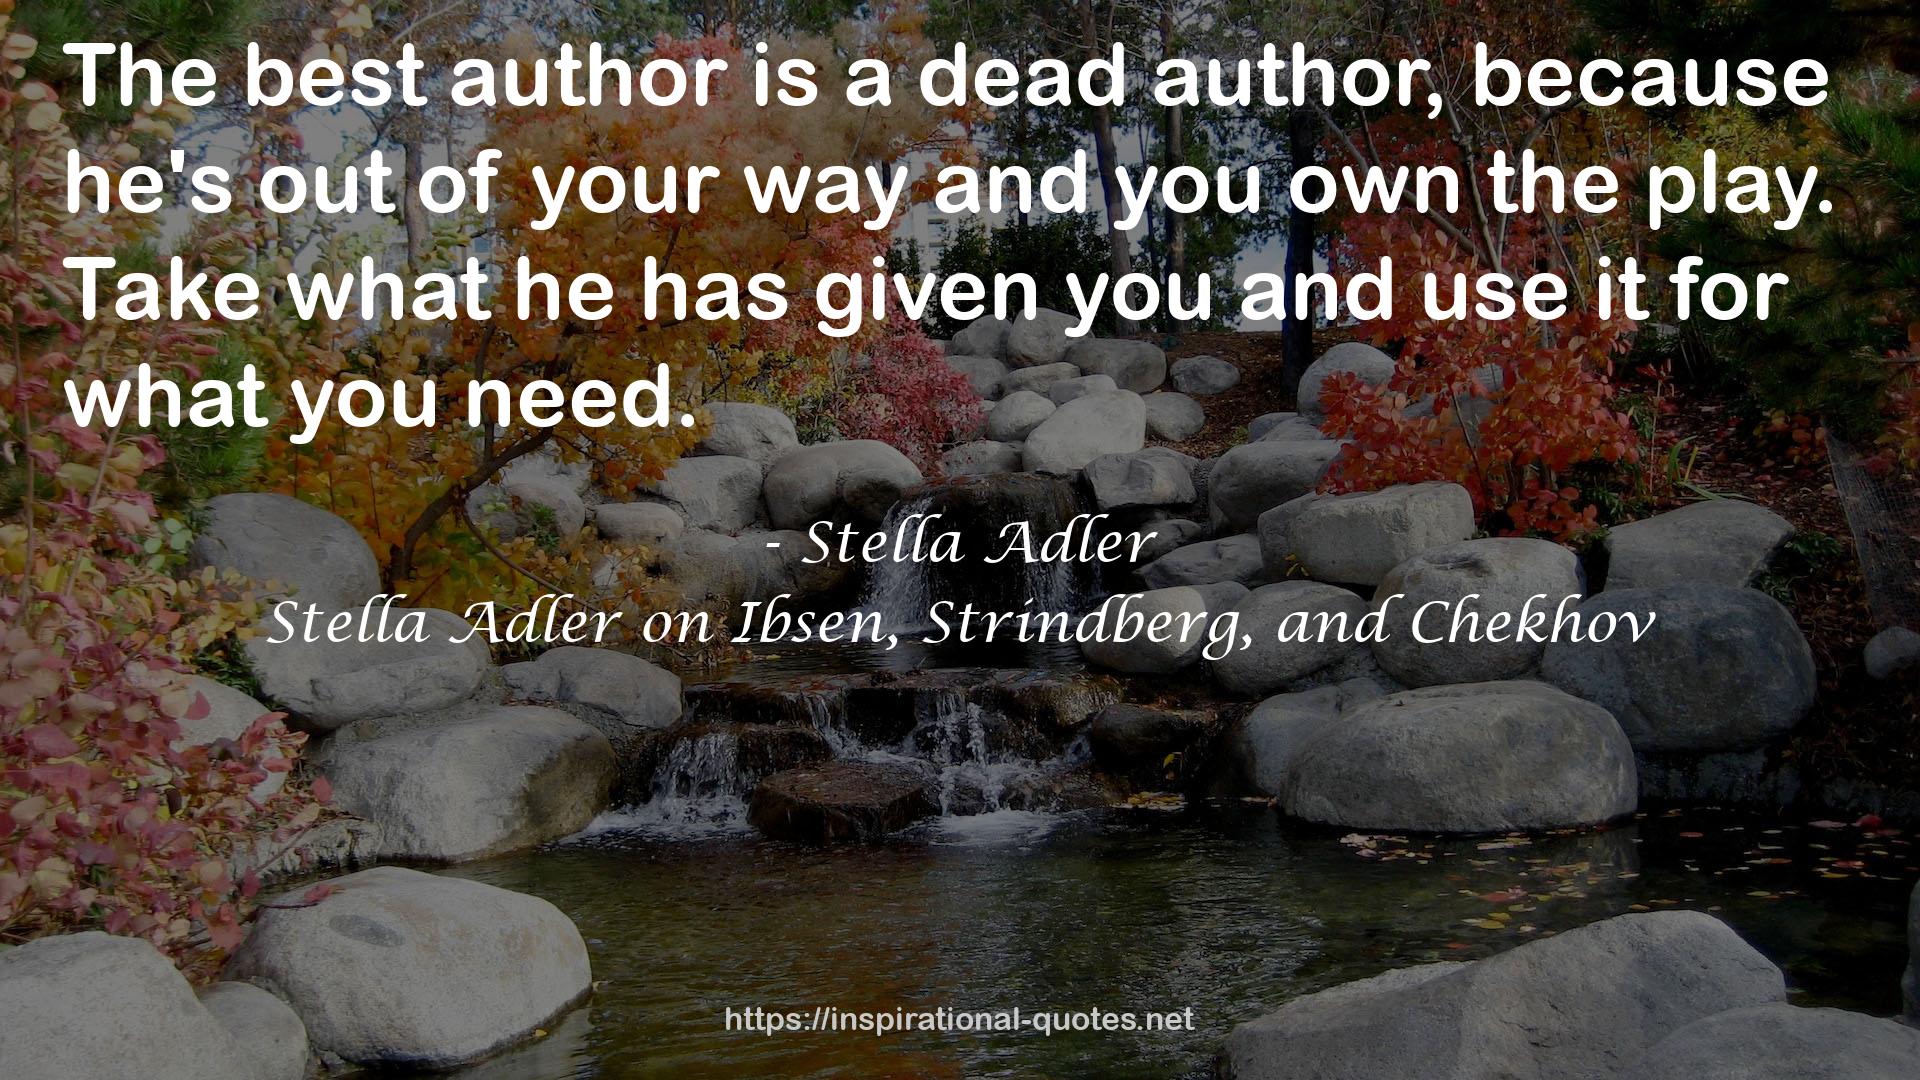 Stella Adler on Ibsen, Strindberg, and Chekhov QUOTES